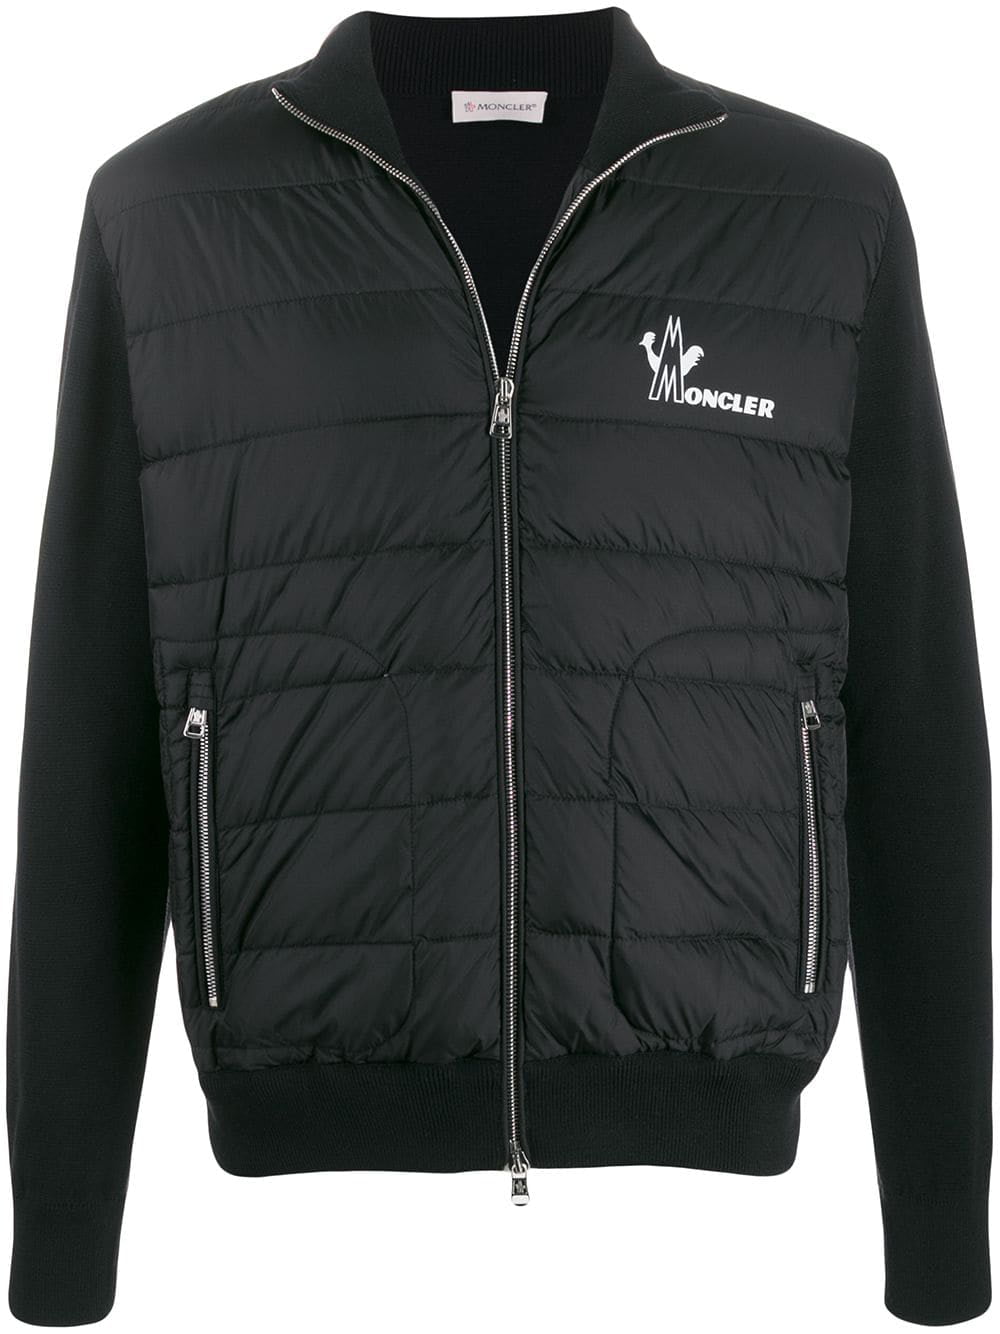 Moncler Men's Black Quilted Sweater Jacket Cardigan (XL) - Walmart.com